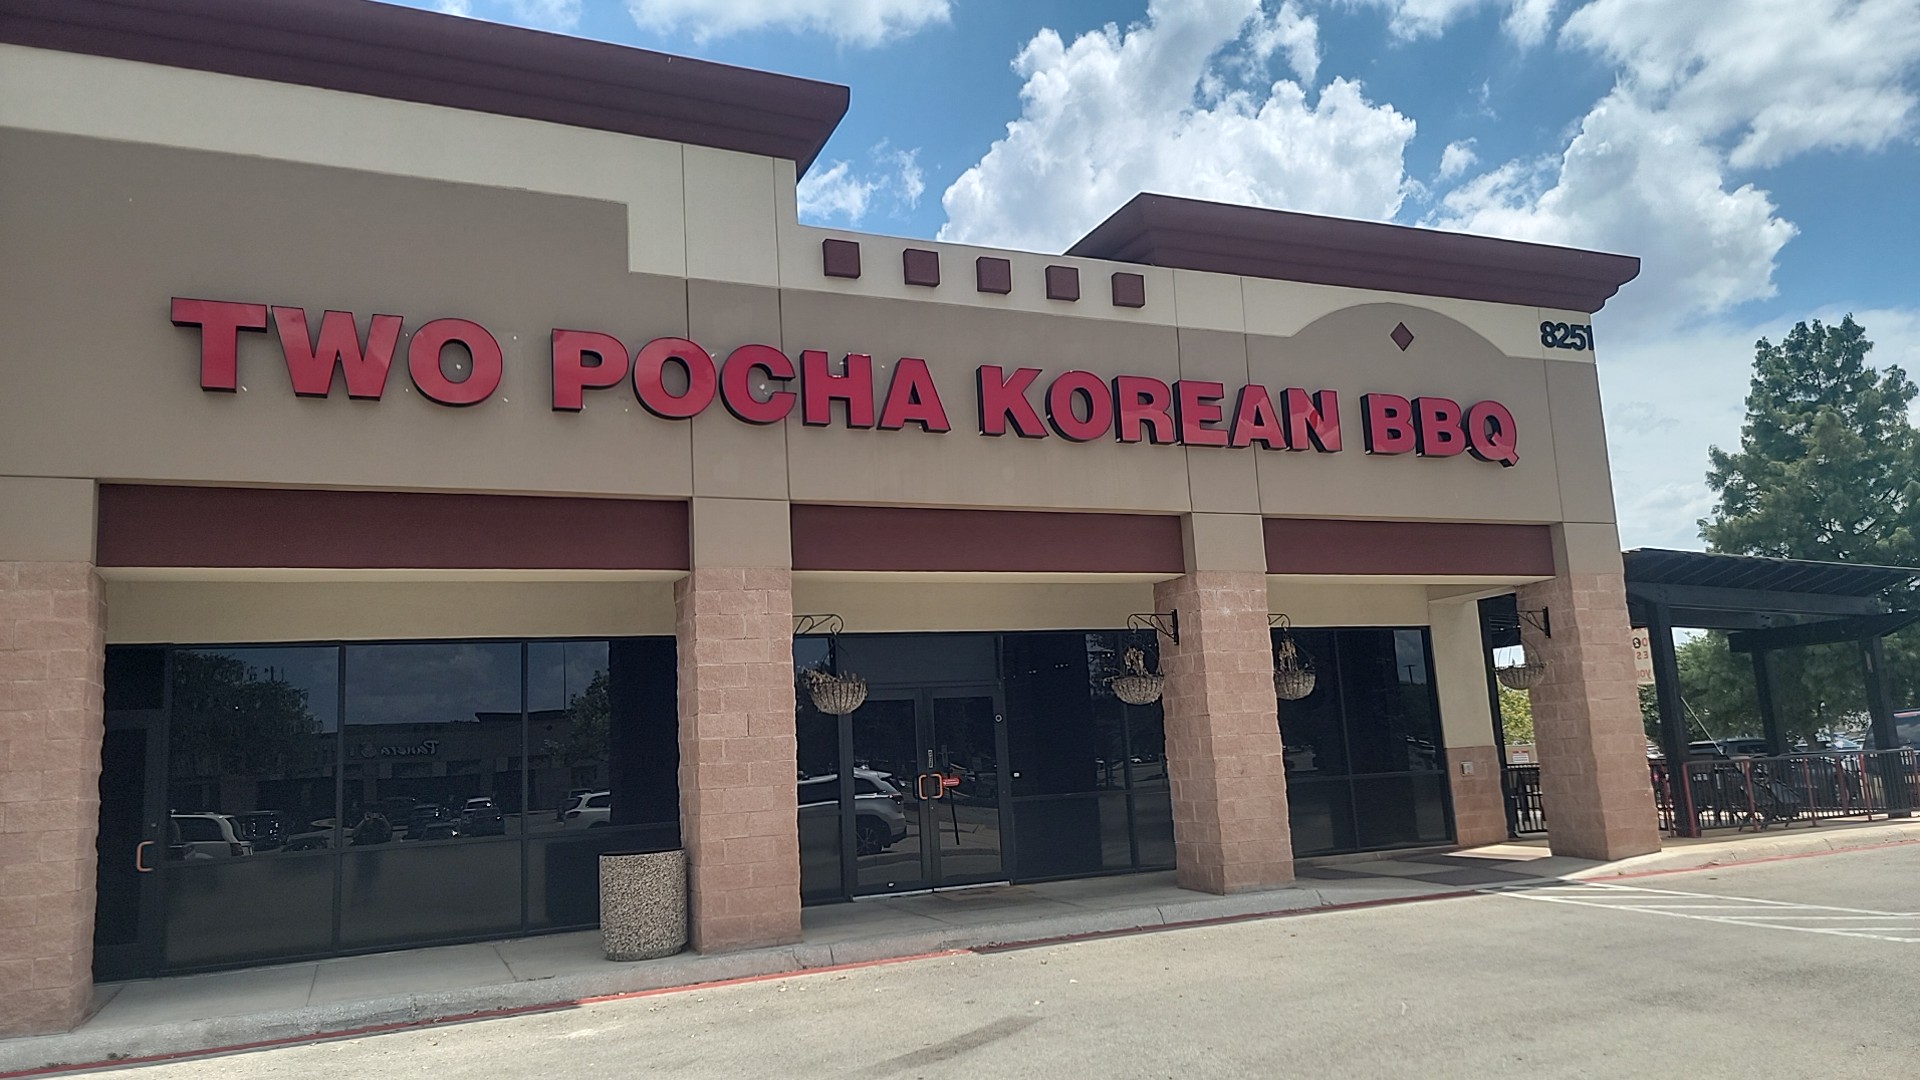 Two 2 Pocha Korean BBQ